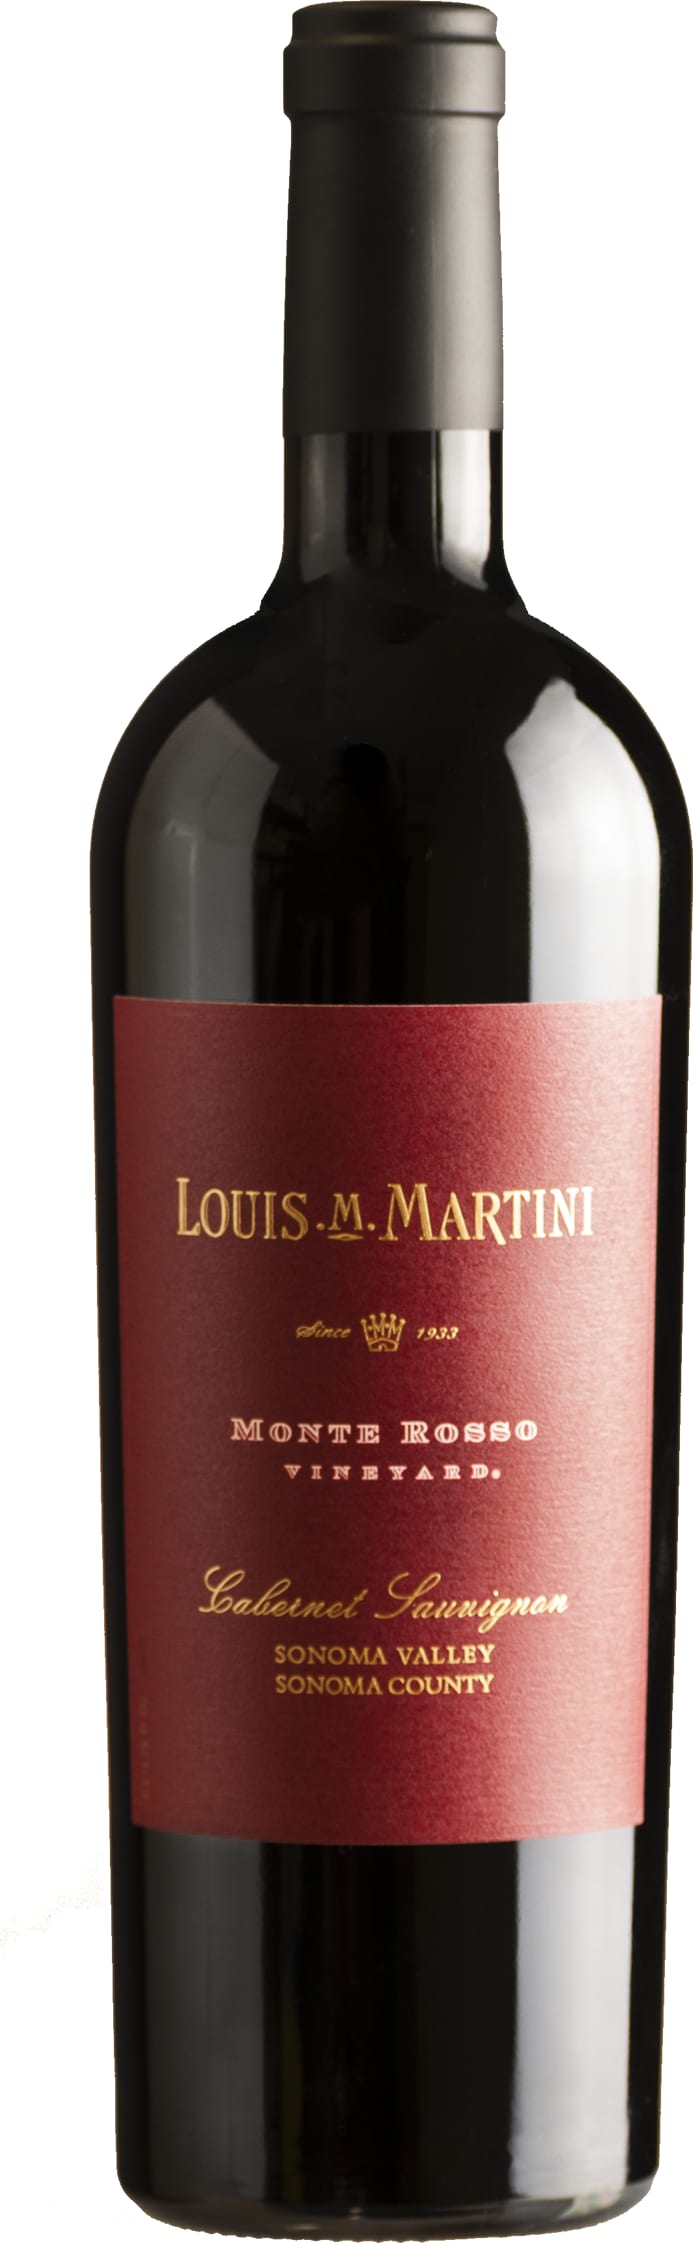 Louis M Martini Monte Rosso Cabernet Sauvignon 2018 75cl - Buy Louis M Martini Wines from GREAT WINES DIRECT wine shop